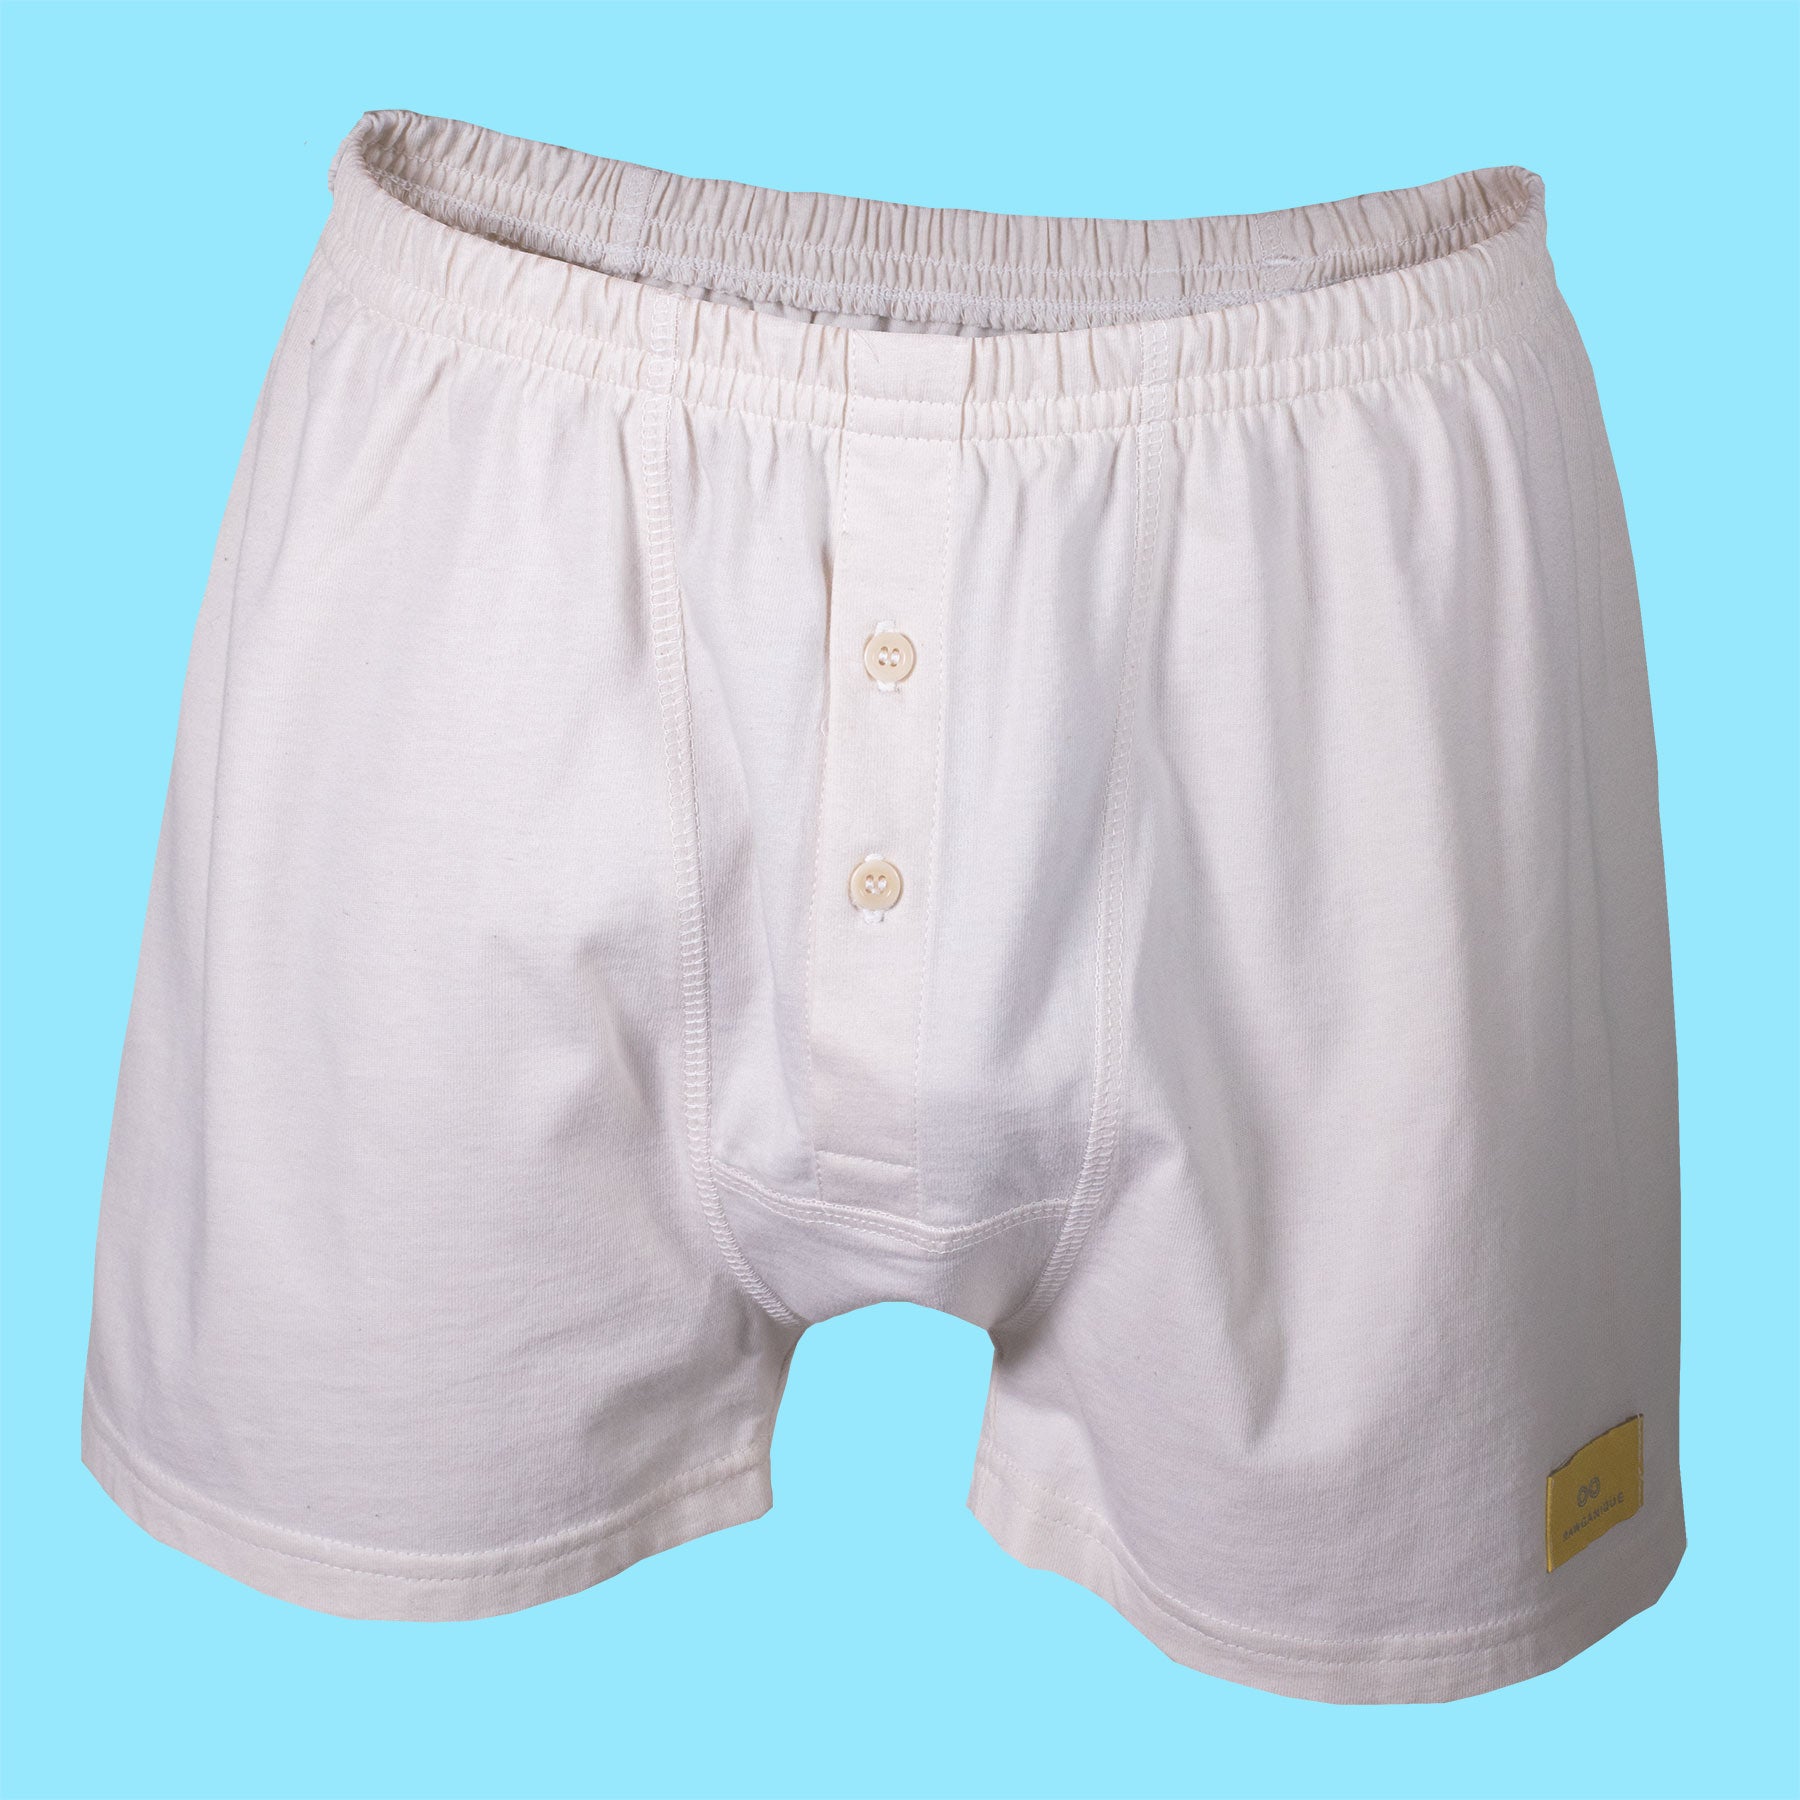 GETOUT Men'S High Cut Briefs White Cotton Boxer Shorts Mens String